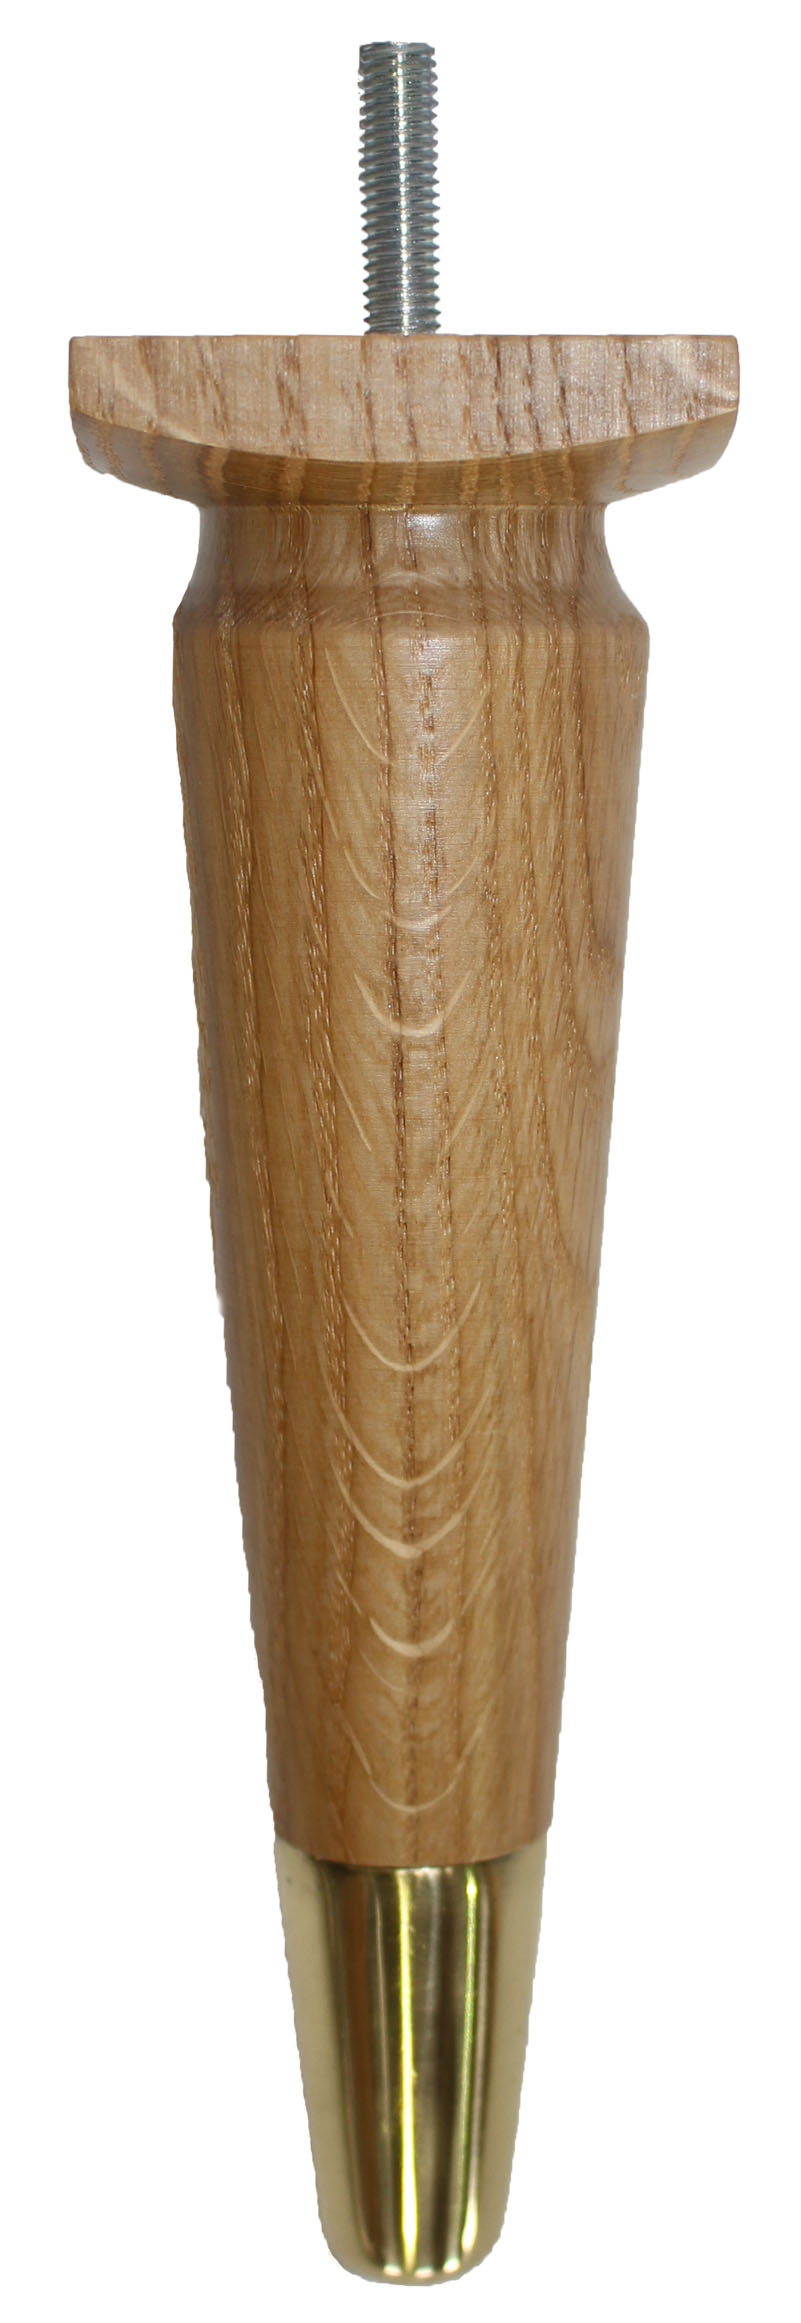 Thelma Solid Oak Furniture Legs - Natural Finish - Brass Slipper Cups - Set of 4